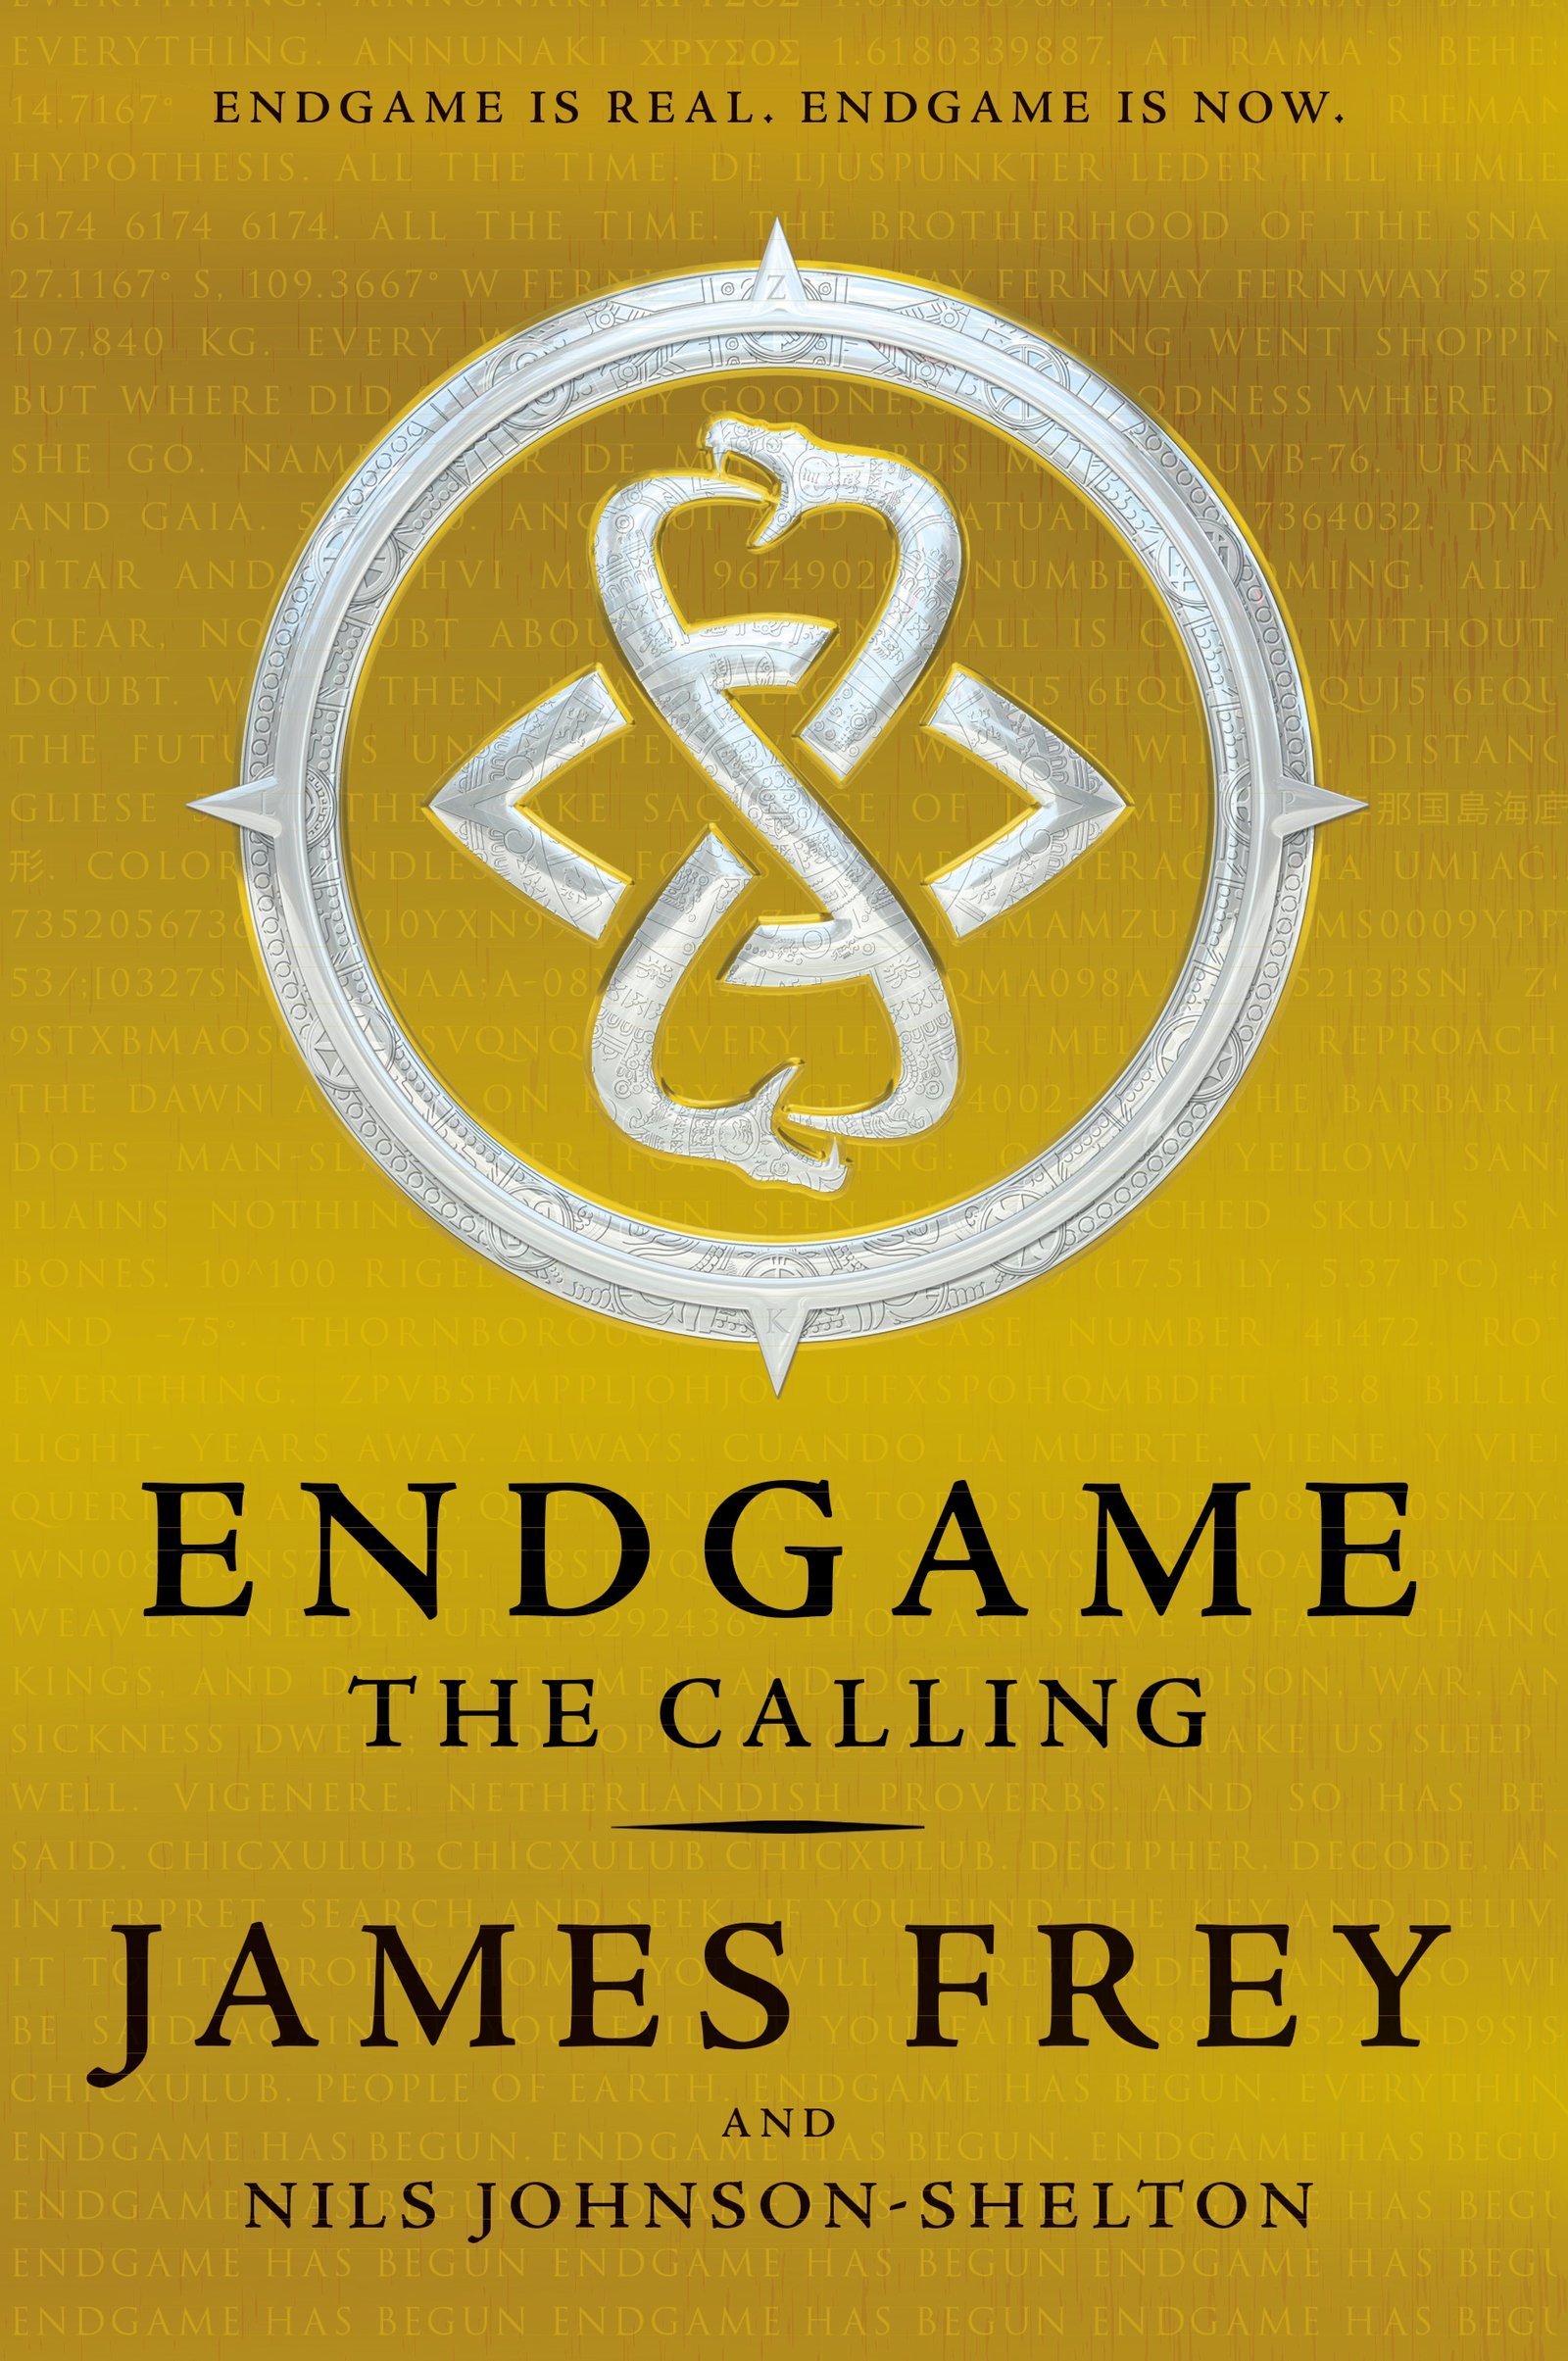 Endgame Librarian Preview: Harper Collins (Fall 2014)